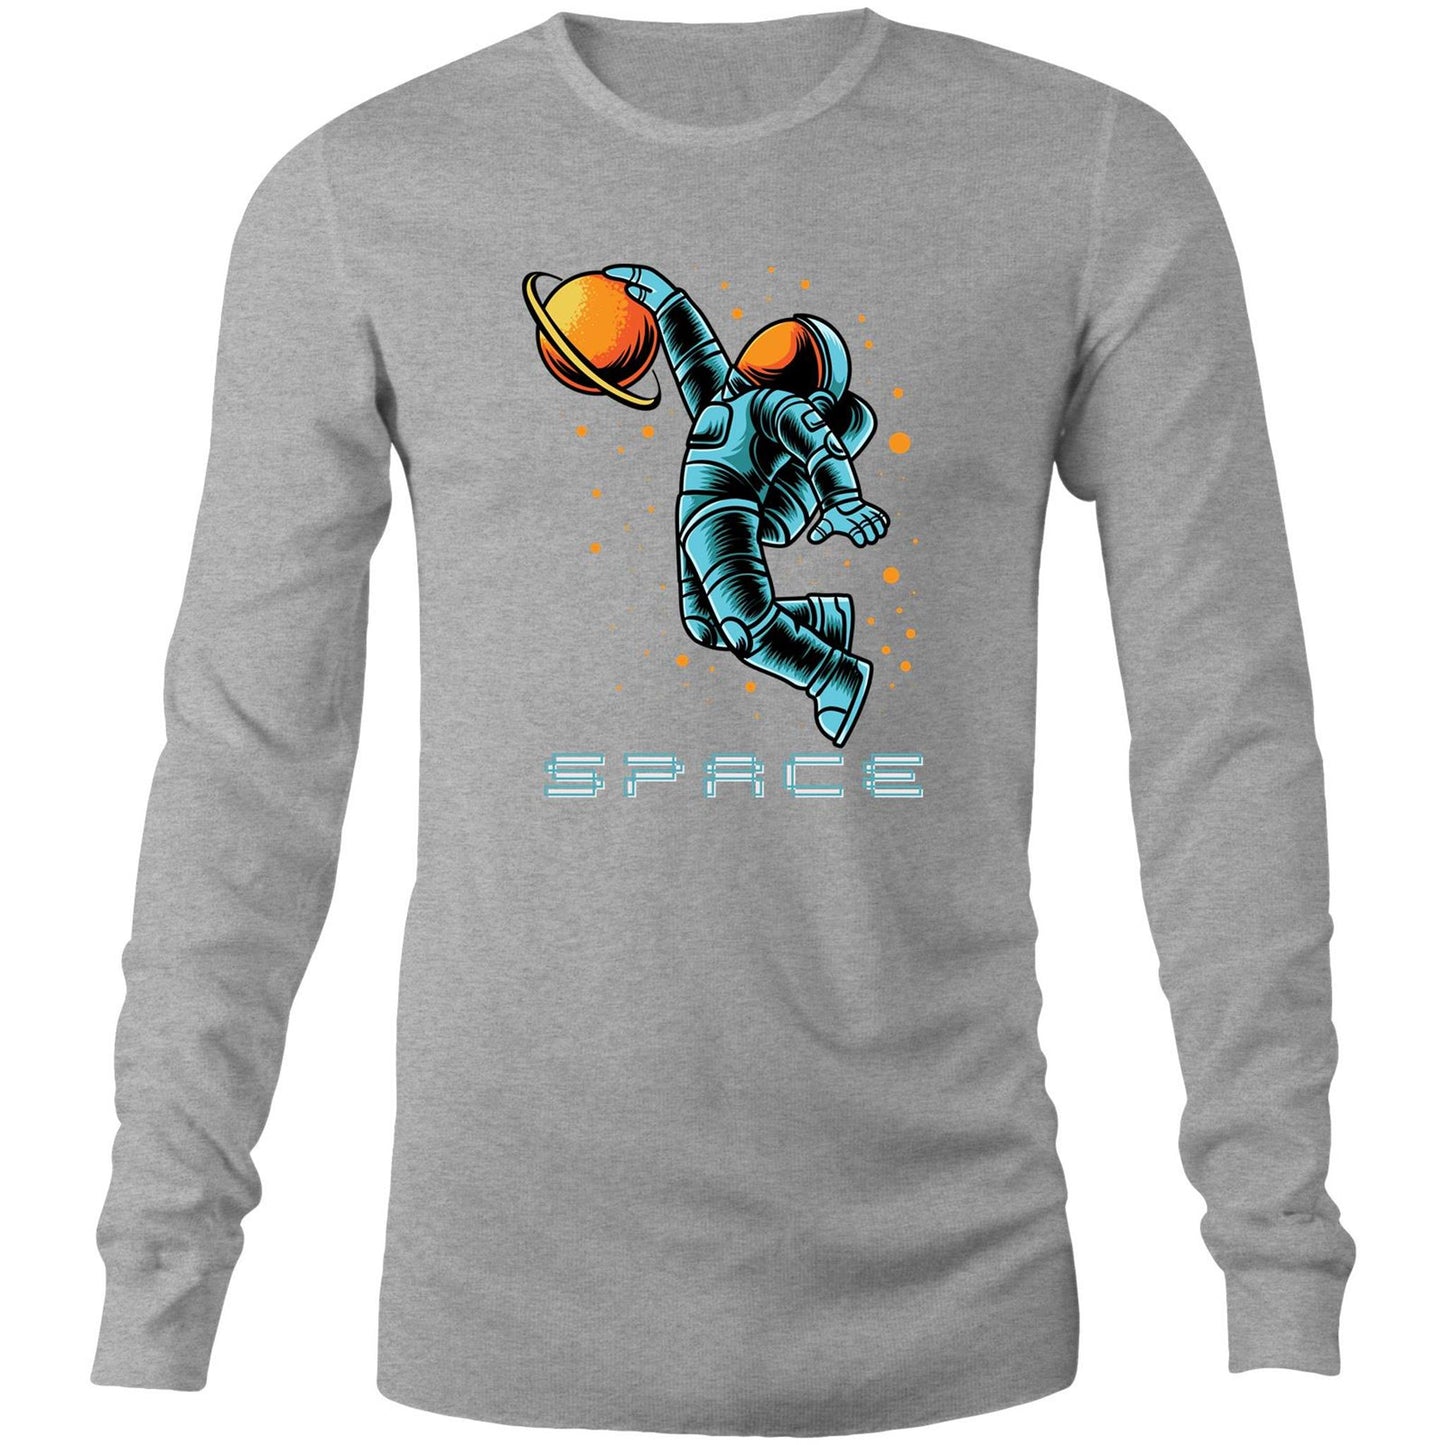 Astronaut Basketball - Long Sleeve T-Shirt Grey Marle Unisex Long Sleeve T-shirt Space